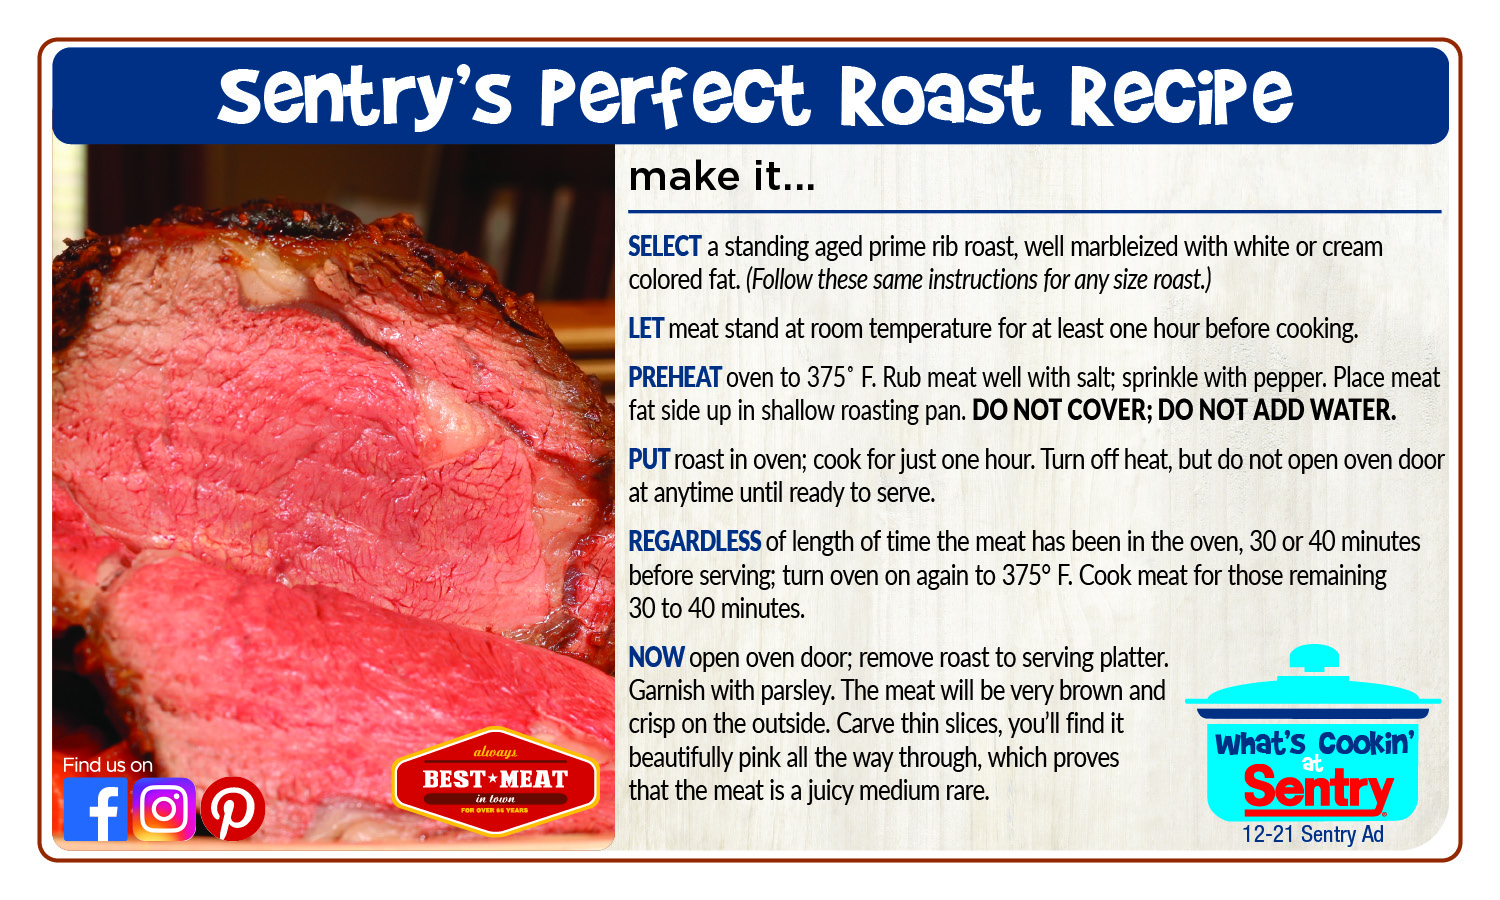 Recipe: Sentry’s Perfect Roast Recipe